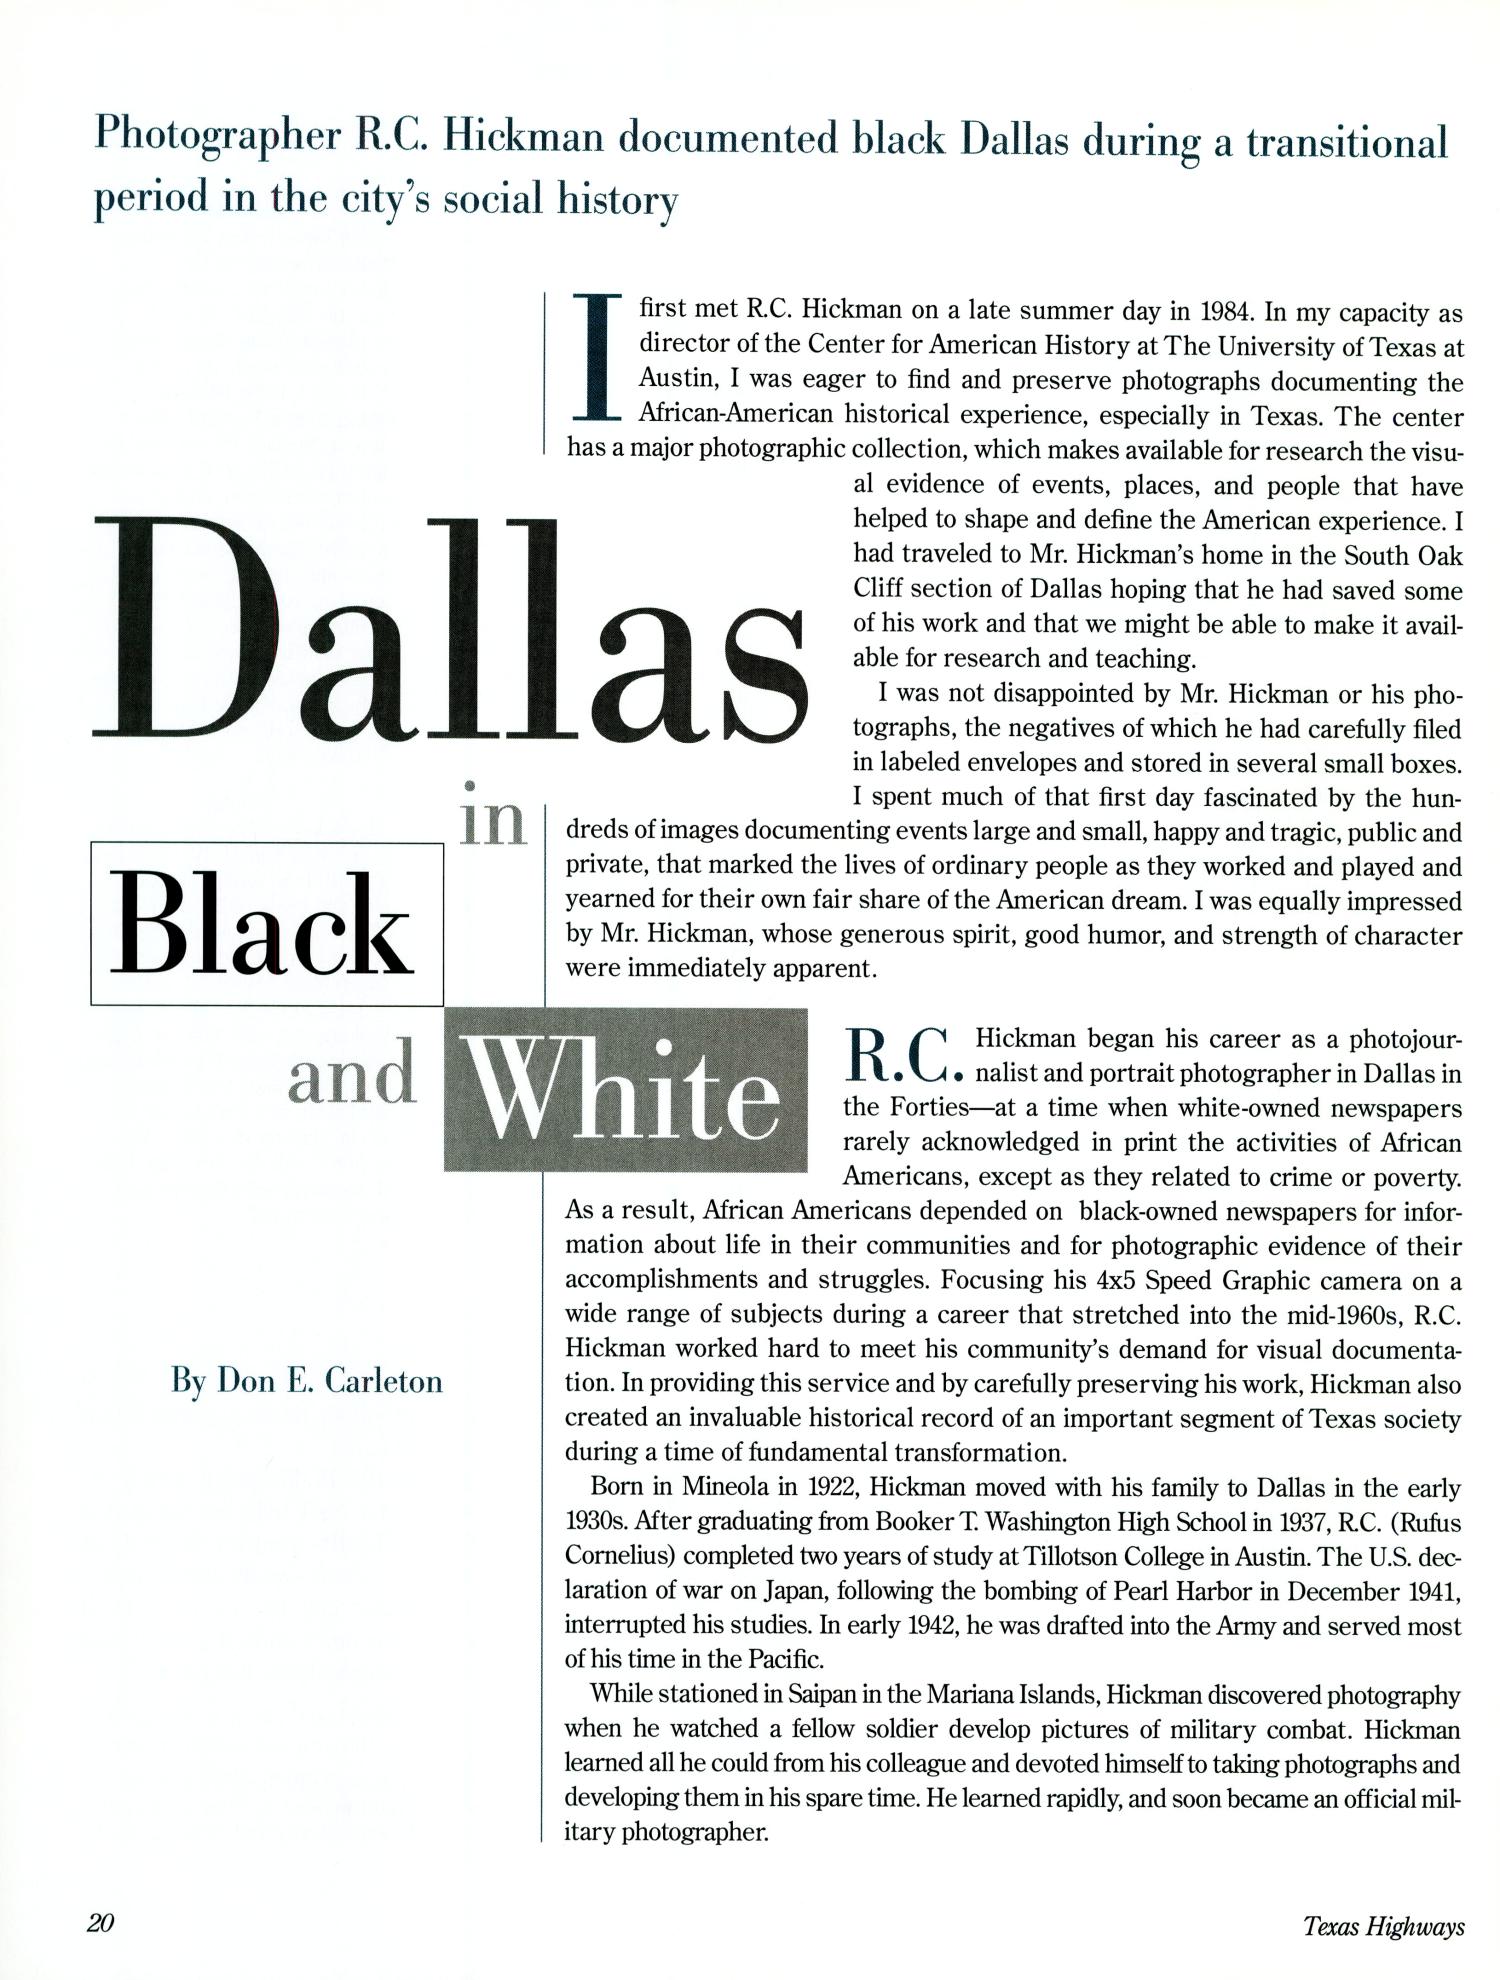 Texas Highways, Volume 46, Number 2, February 1999
                                                
                                                    20
                                                